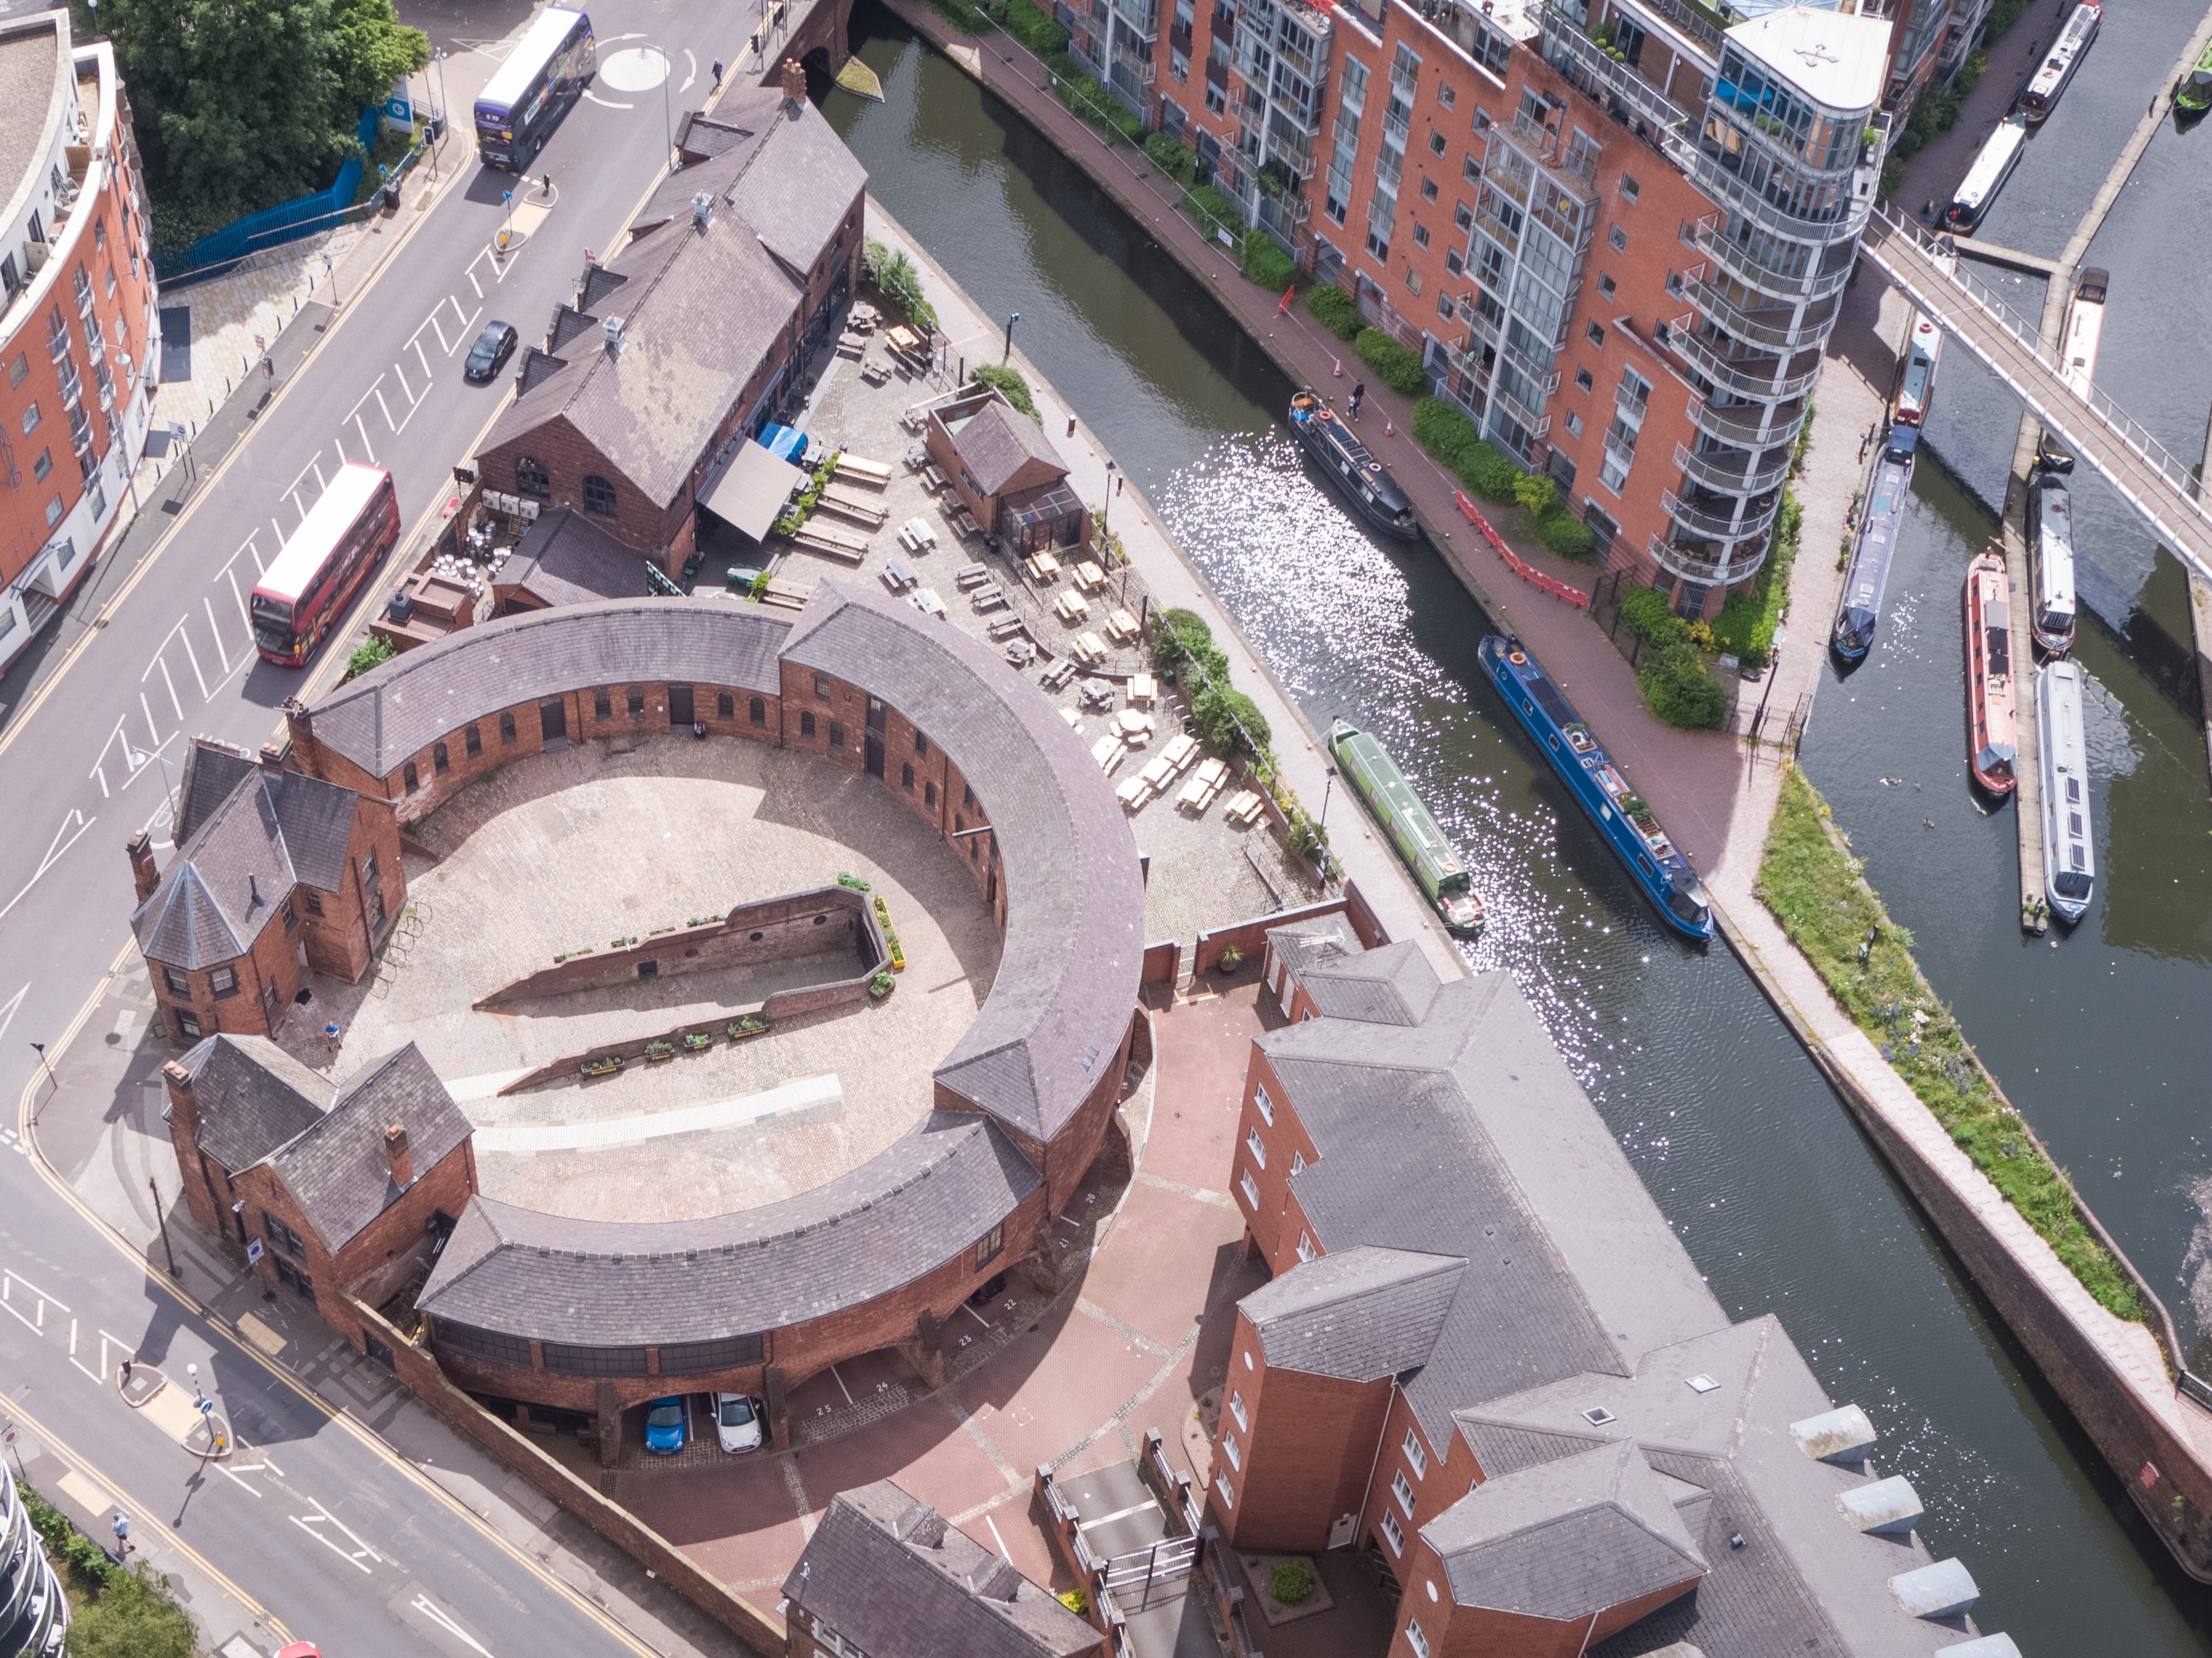 Roundhouse Birmingham has plenty of water-based activities to enjoy